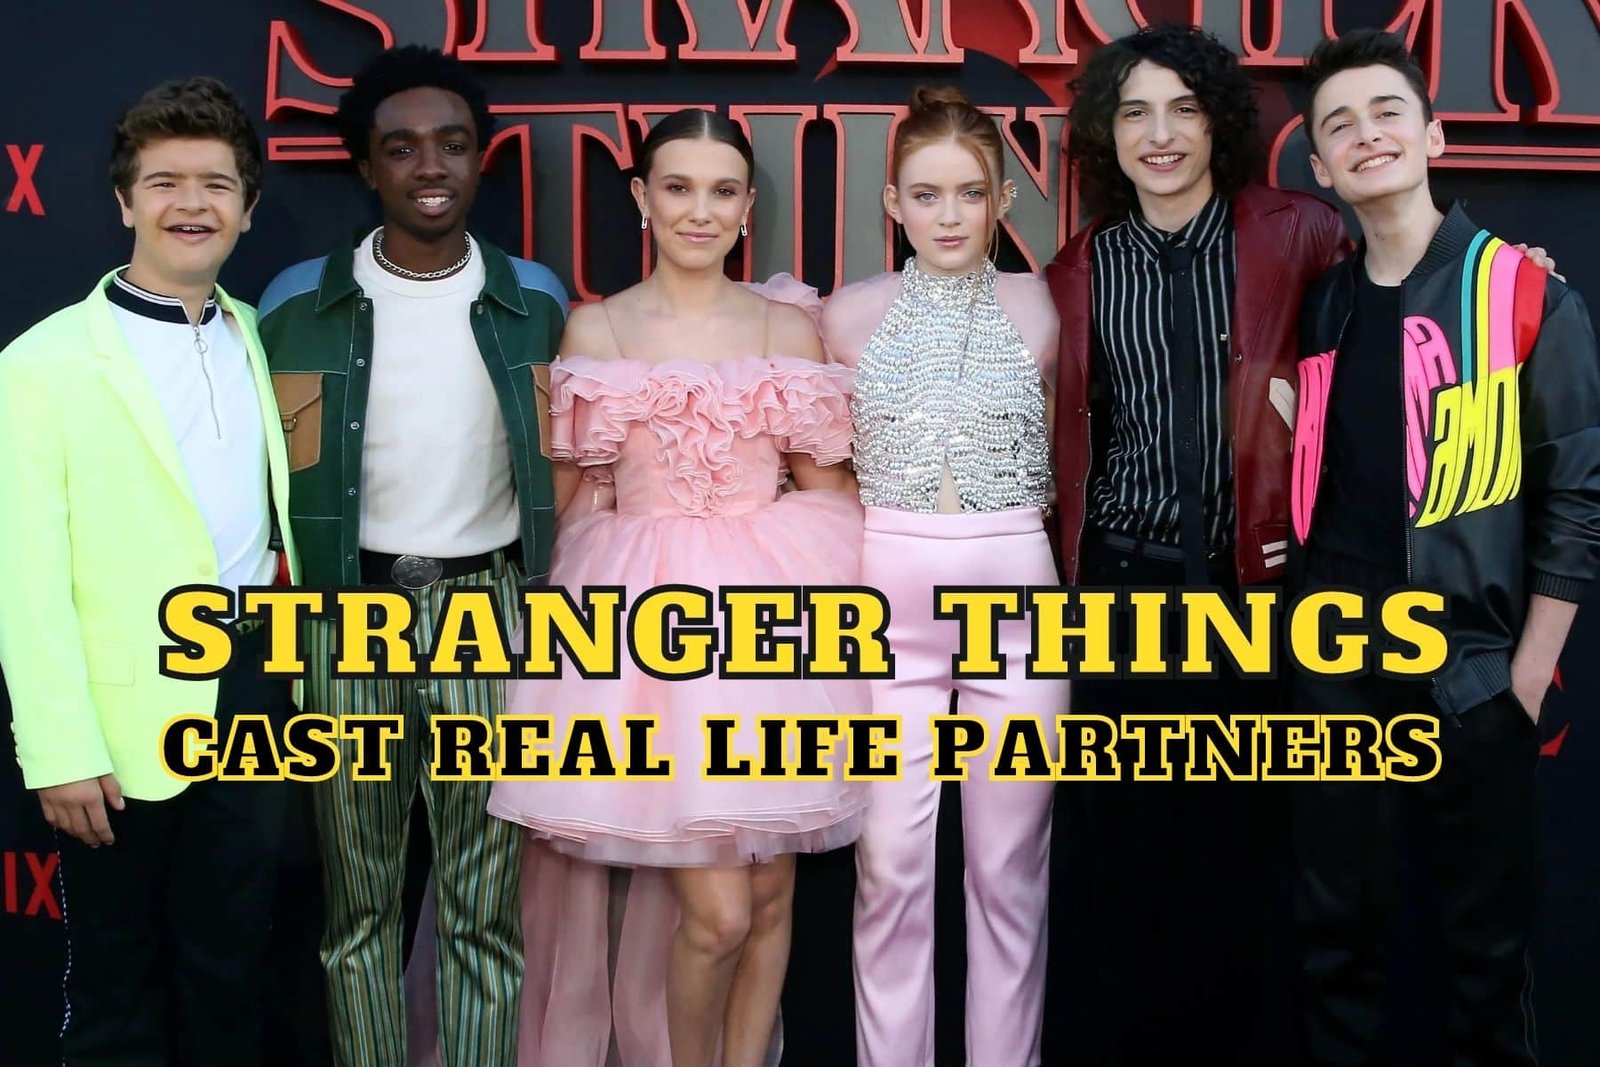 Stranger Things Cast Real Life Partners Revealed